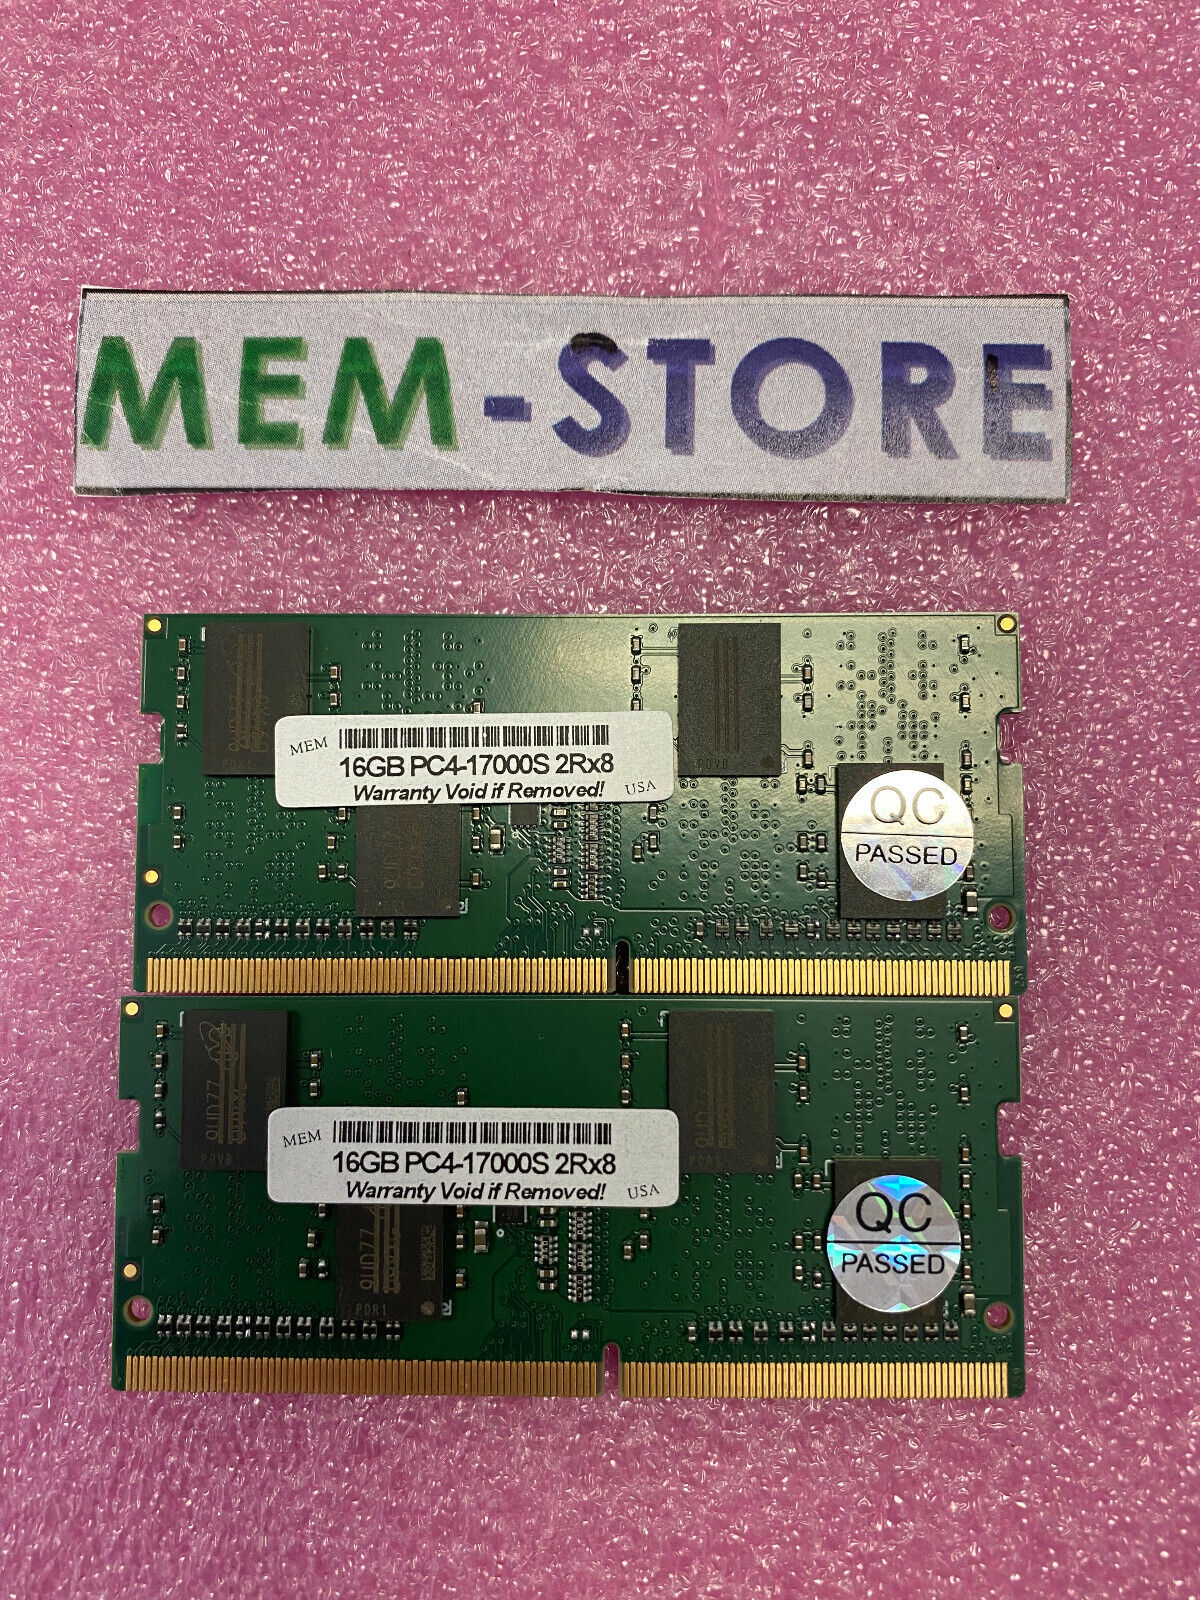 32GB (2x16GB) SODIMM PC4-17000S DDR4-2133 Memory Alienware R3 17 2016 6th gen